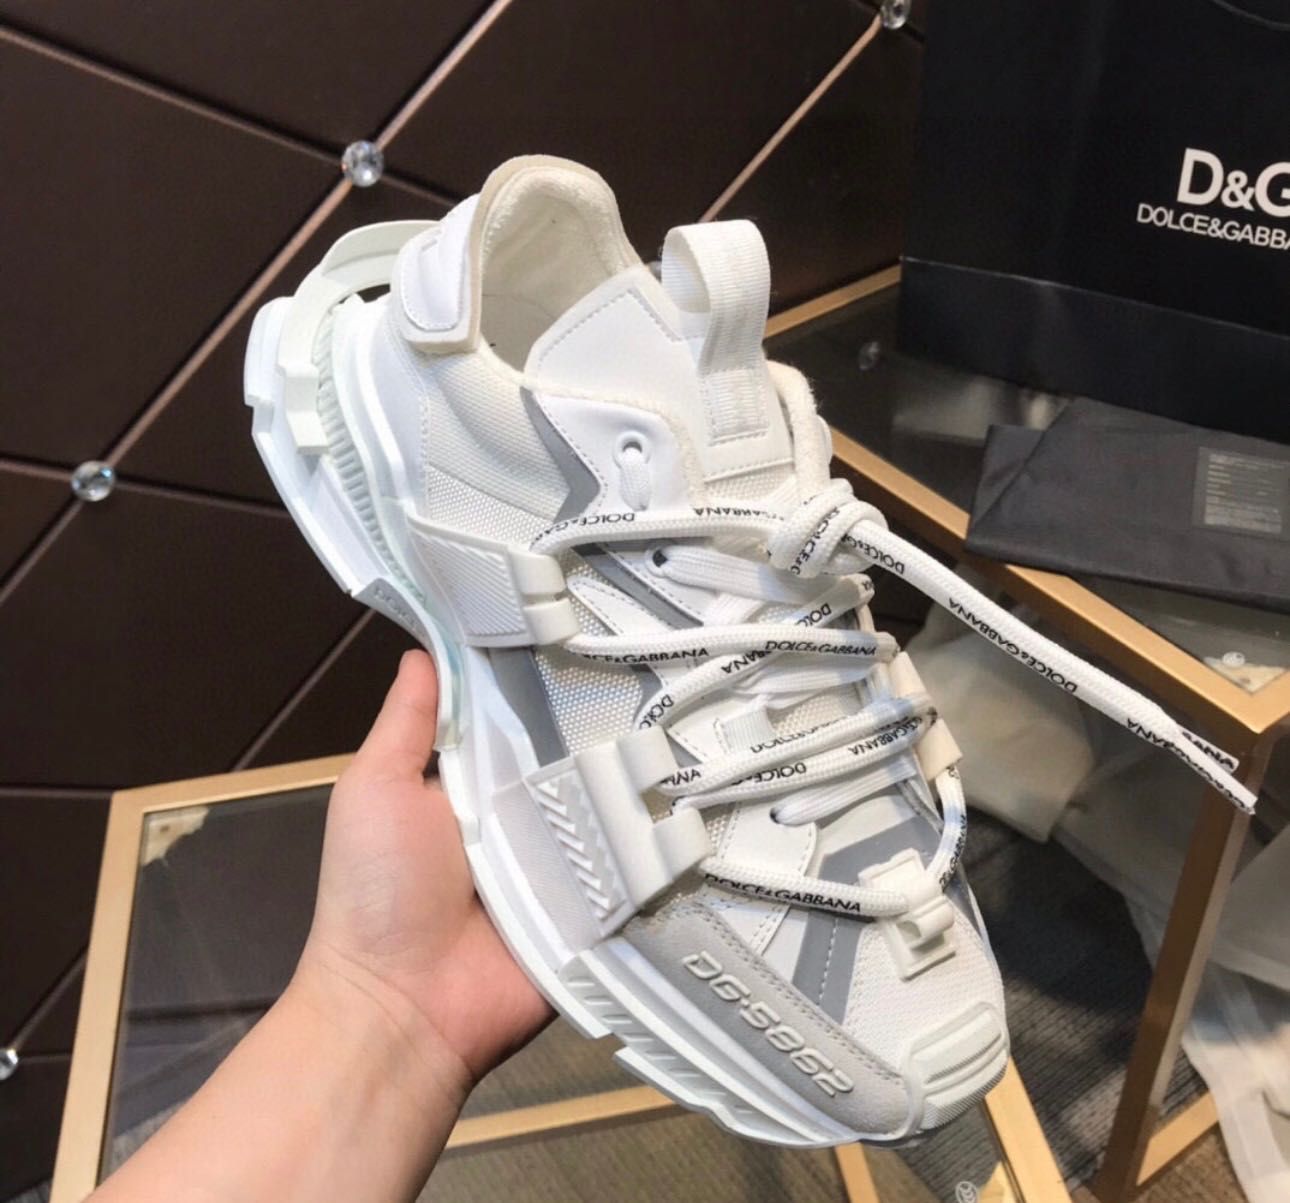 Dolce&Gabbana sneakers